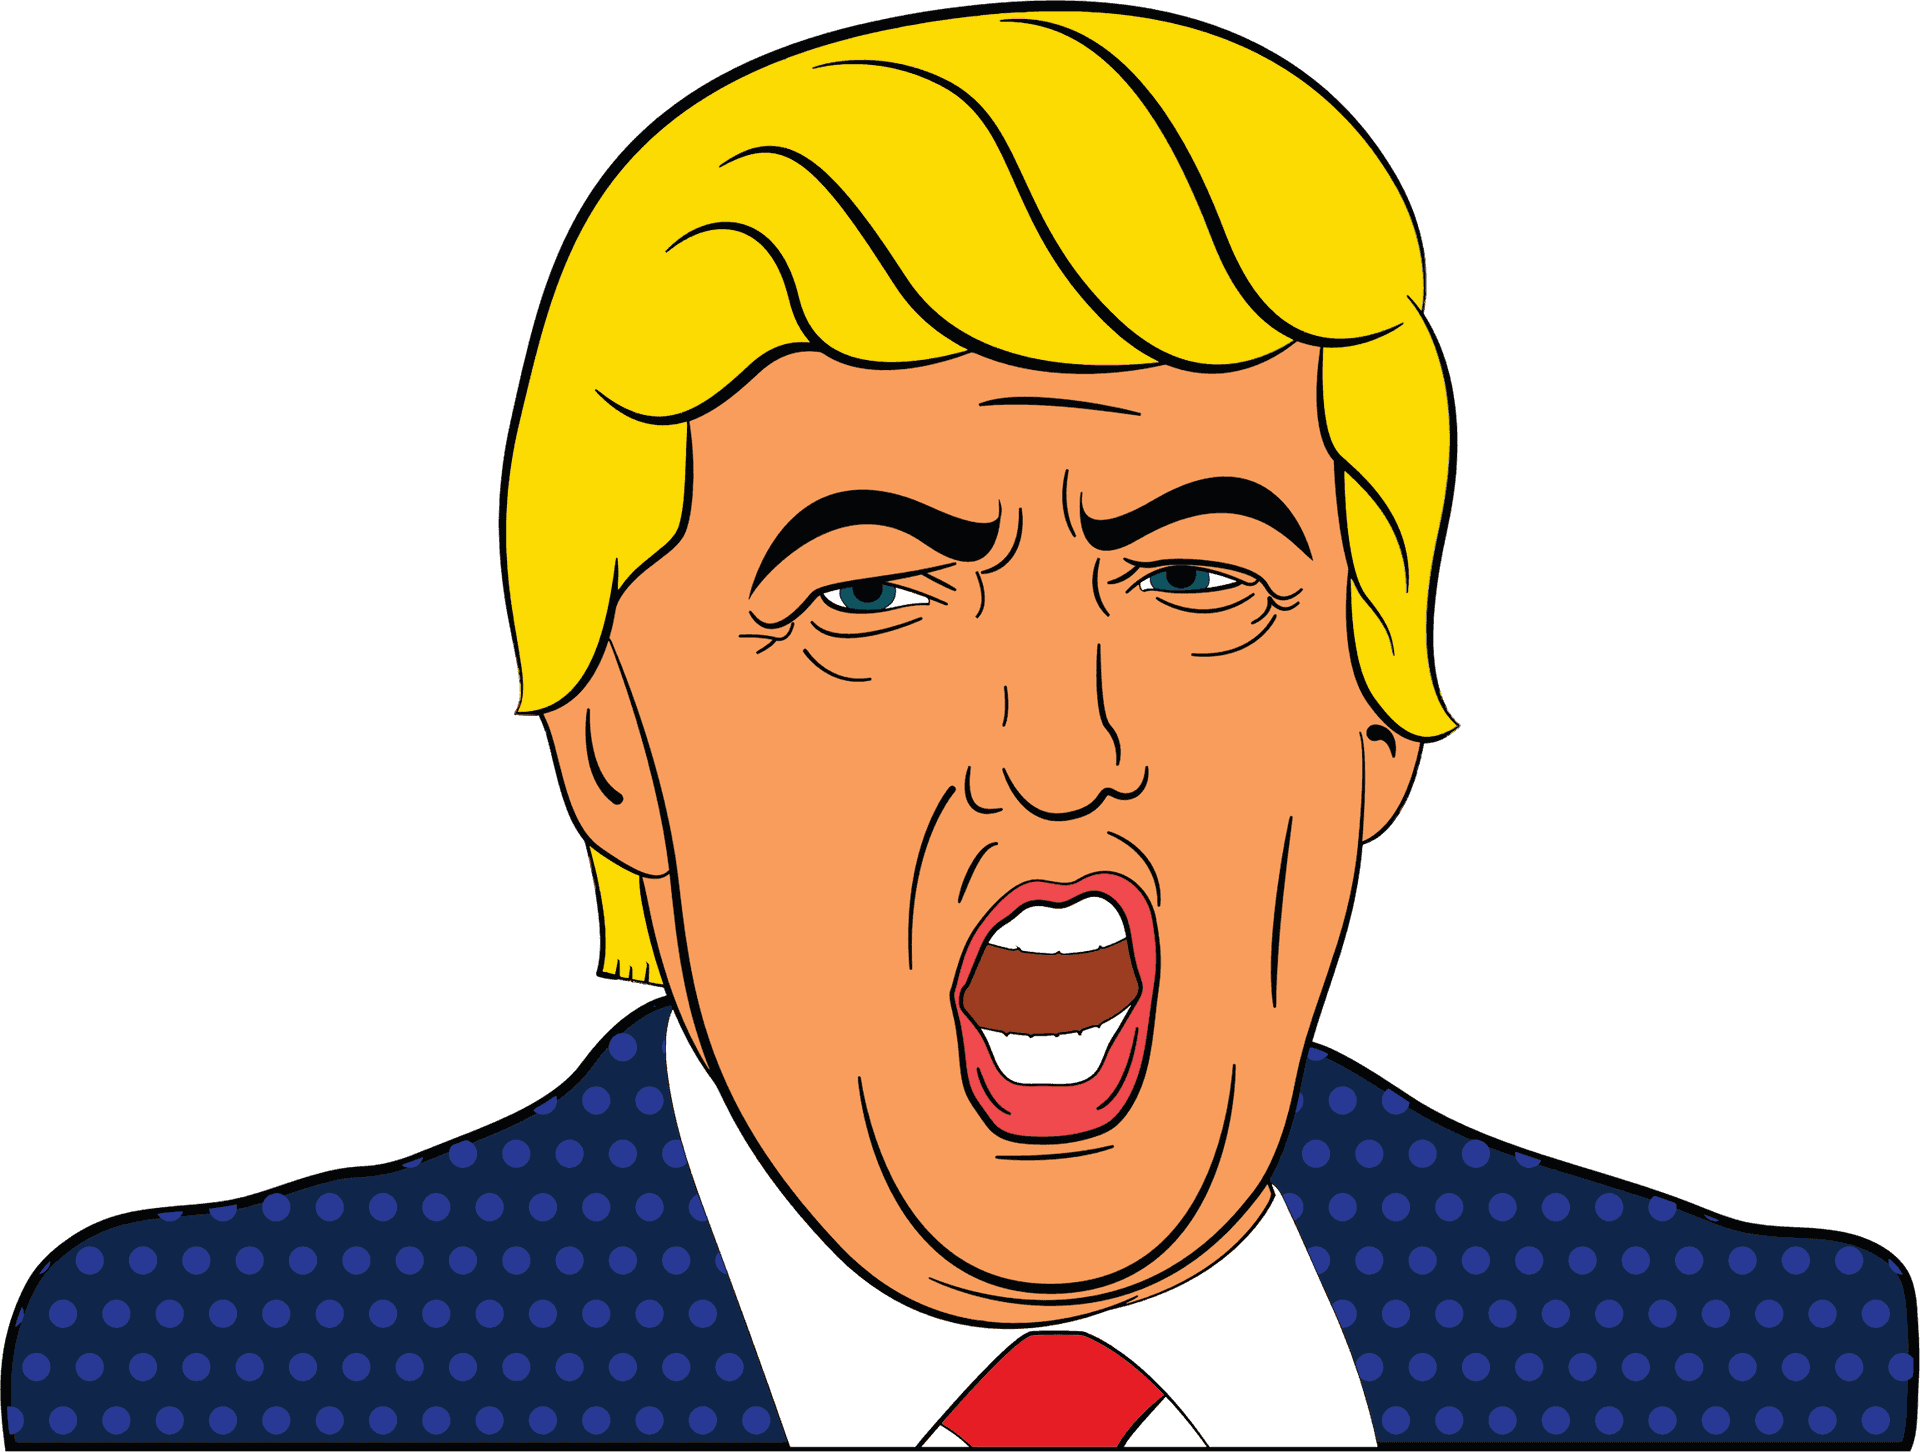 Animated Donald Trump Speaking Illustration PNG image